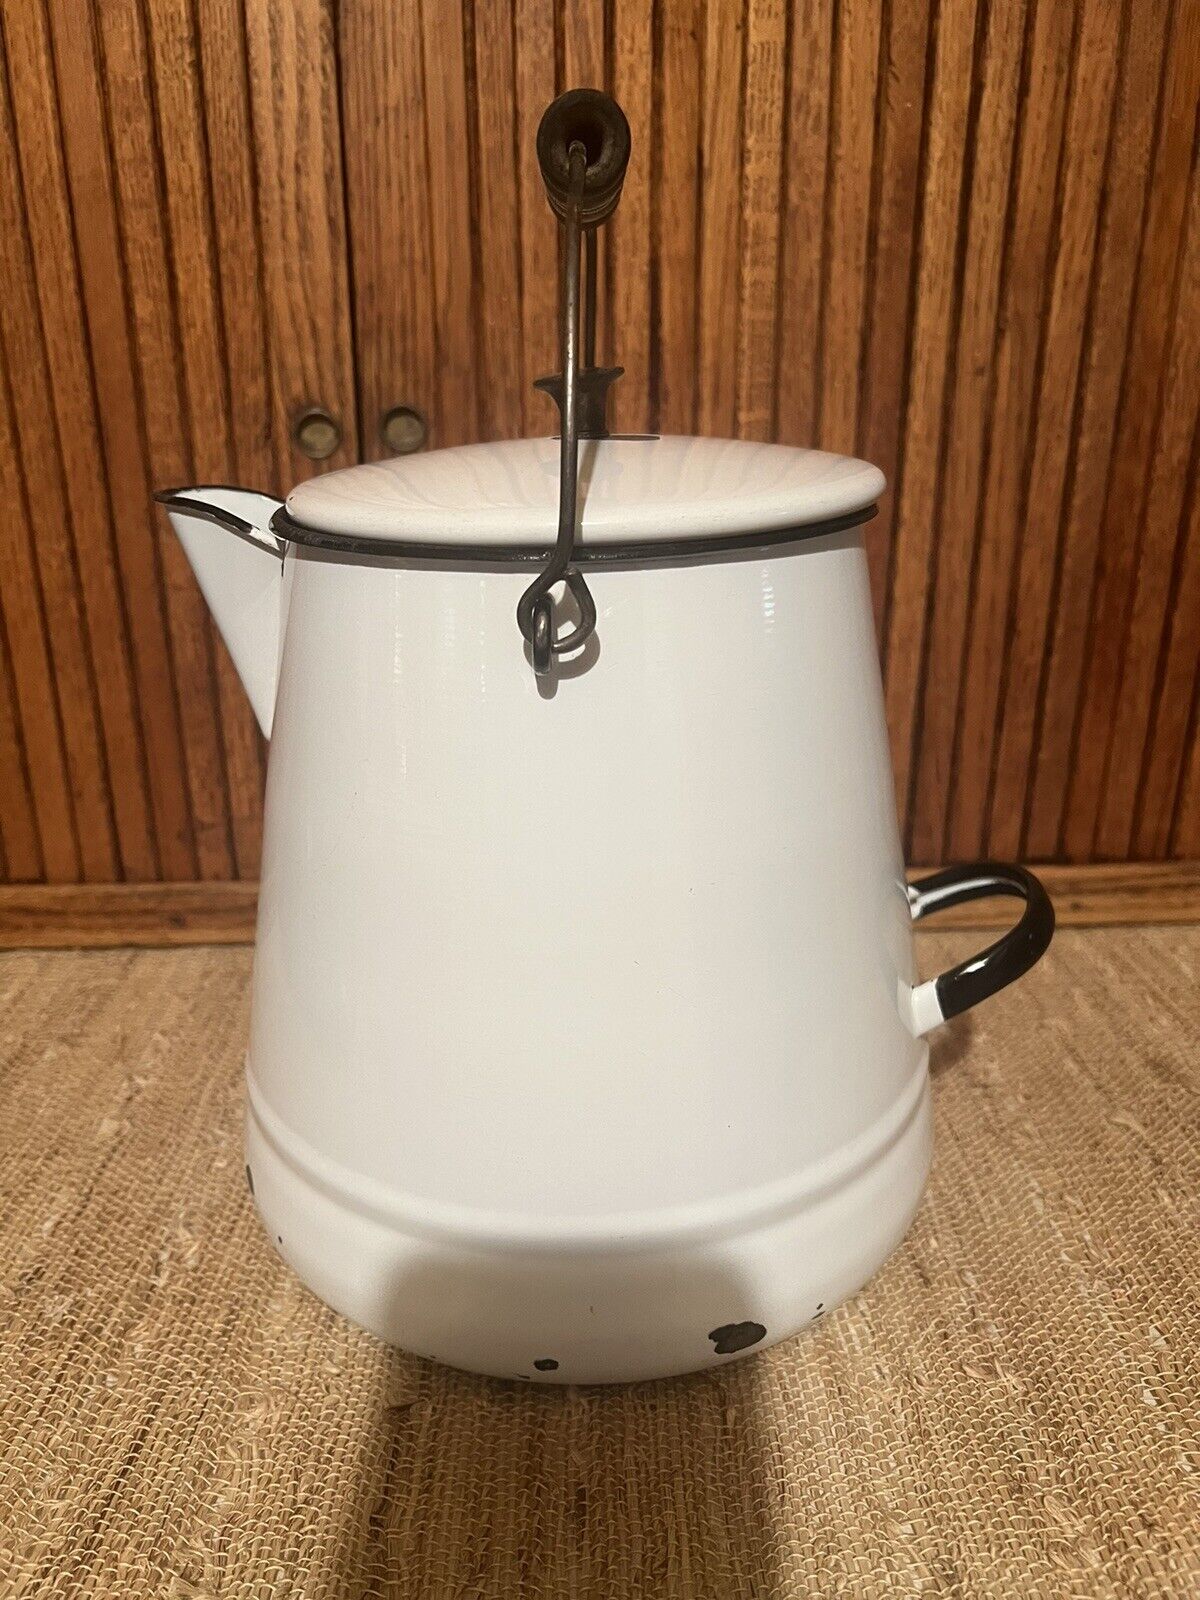 Large Vintage White Enamelware Cowboy Coffee Pot Kettle w/ Drainage for Planter